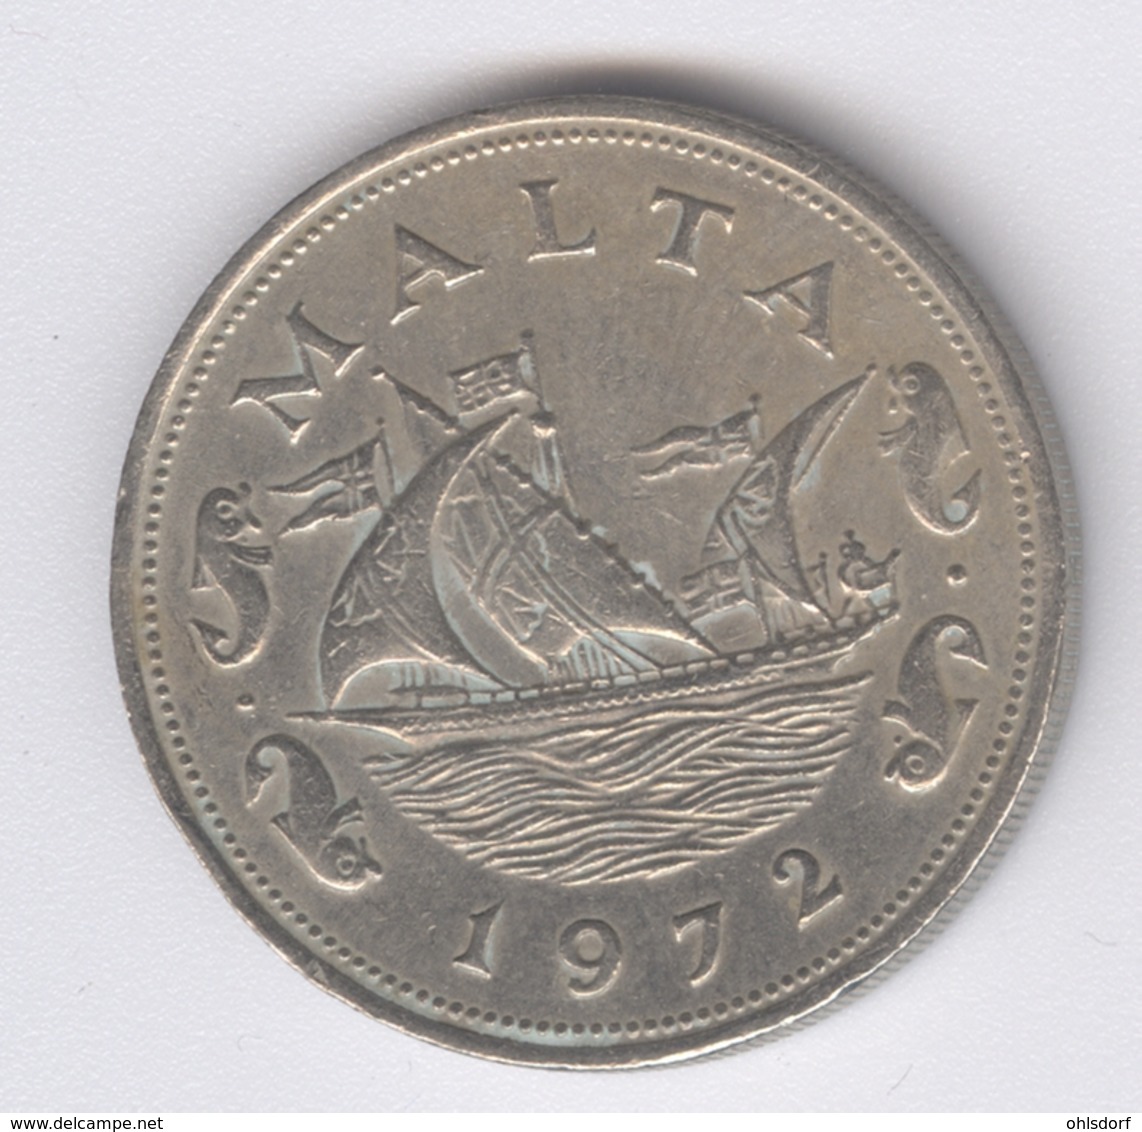 MALTA 1972: 10 Cents, KM 11 - Malta